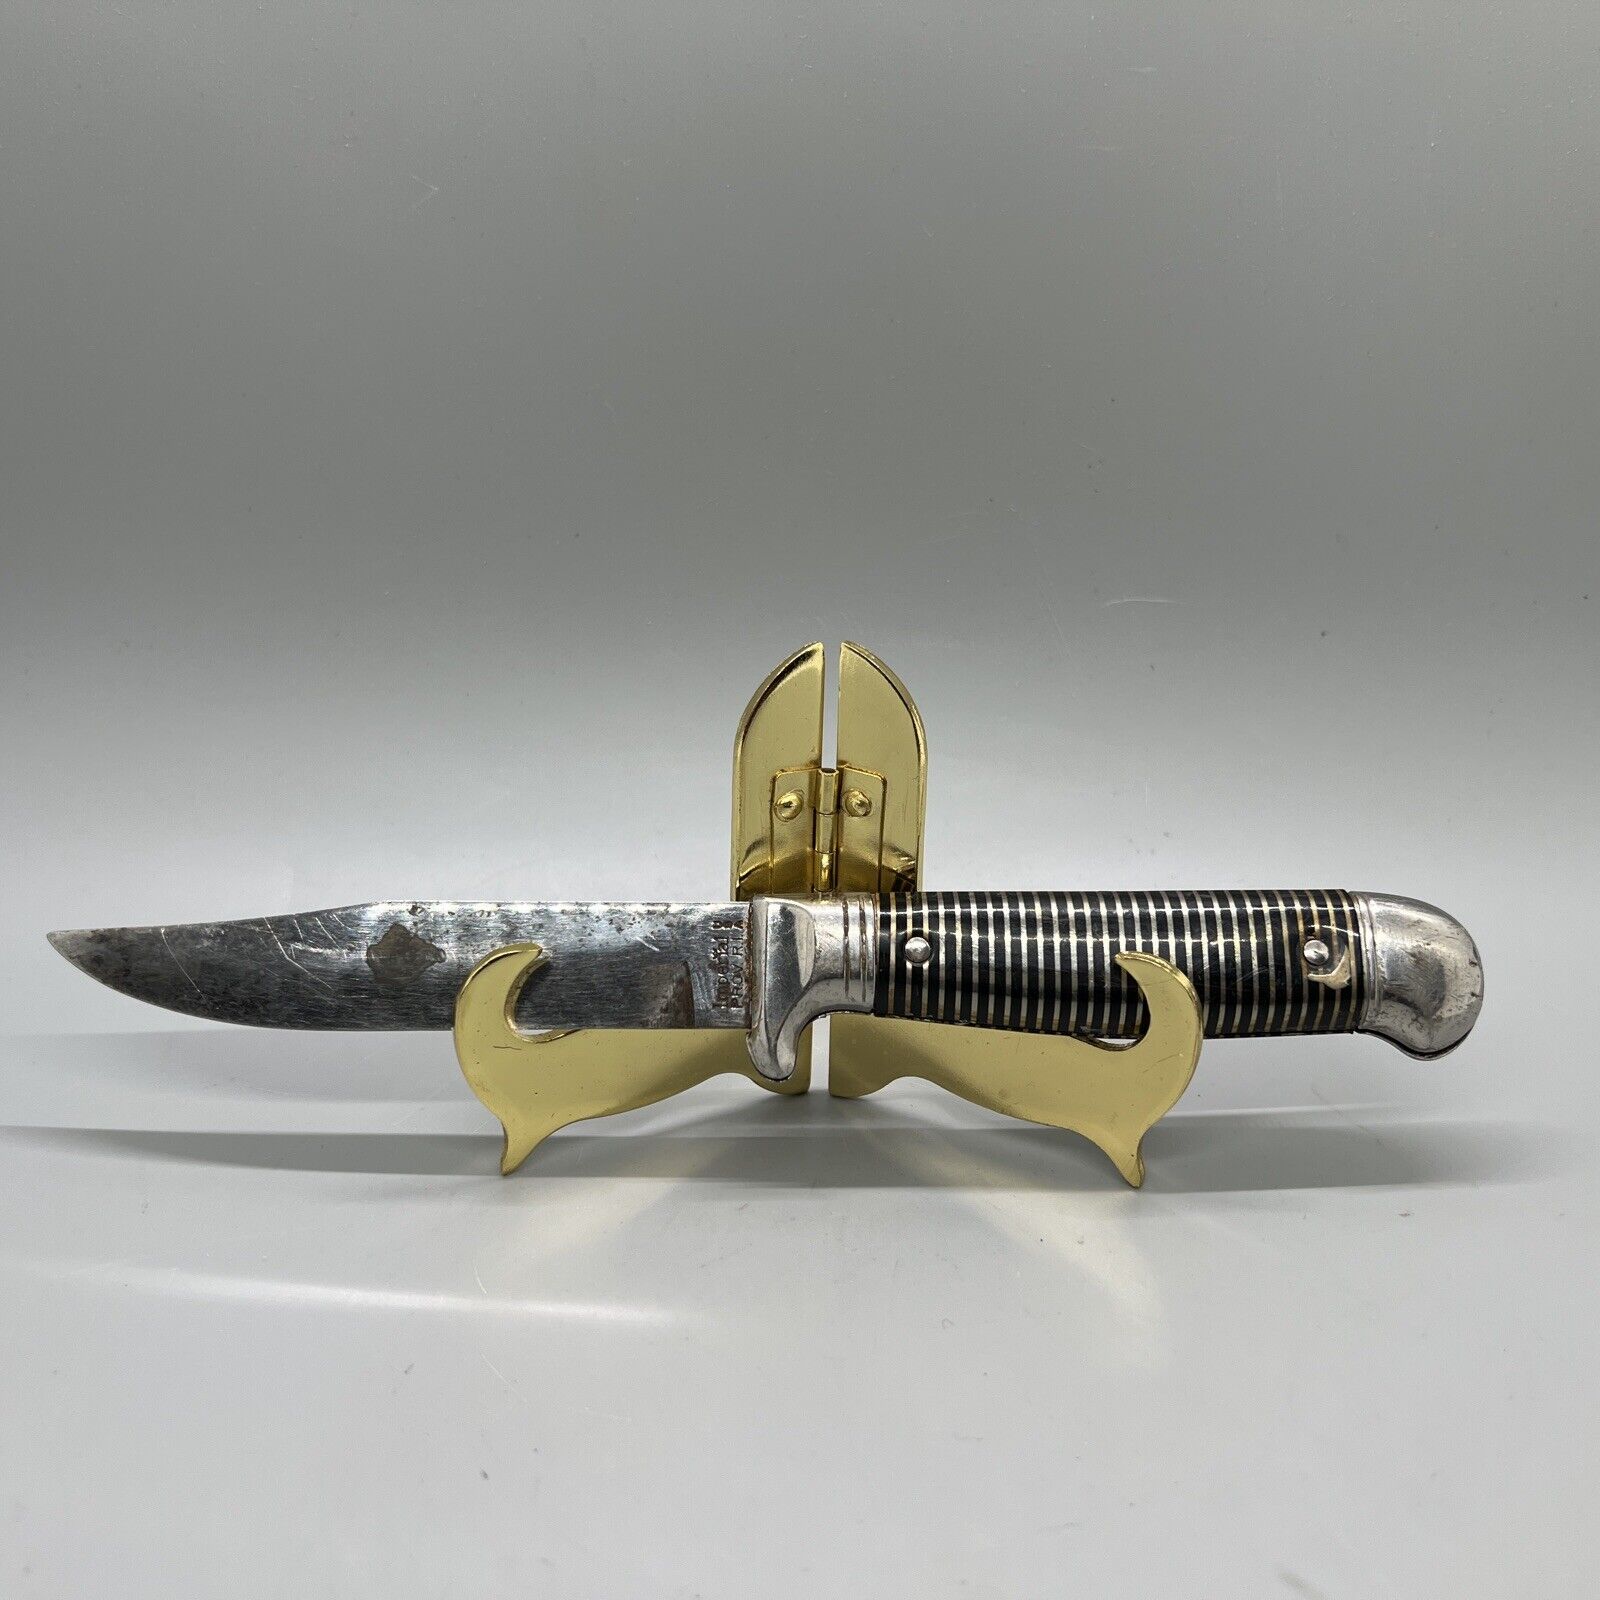 Imperial Knife Providence Rhode Island RI Striped Rare Fixed Blade USA 8.25” US